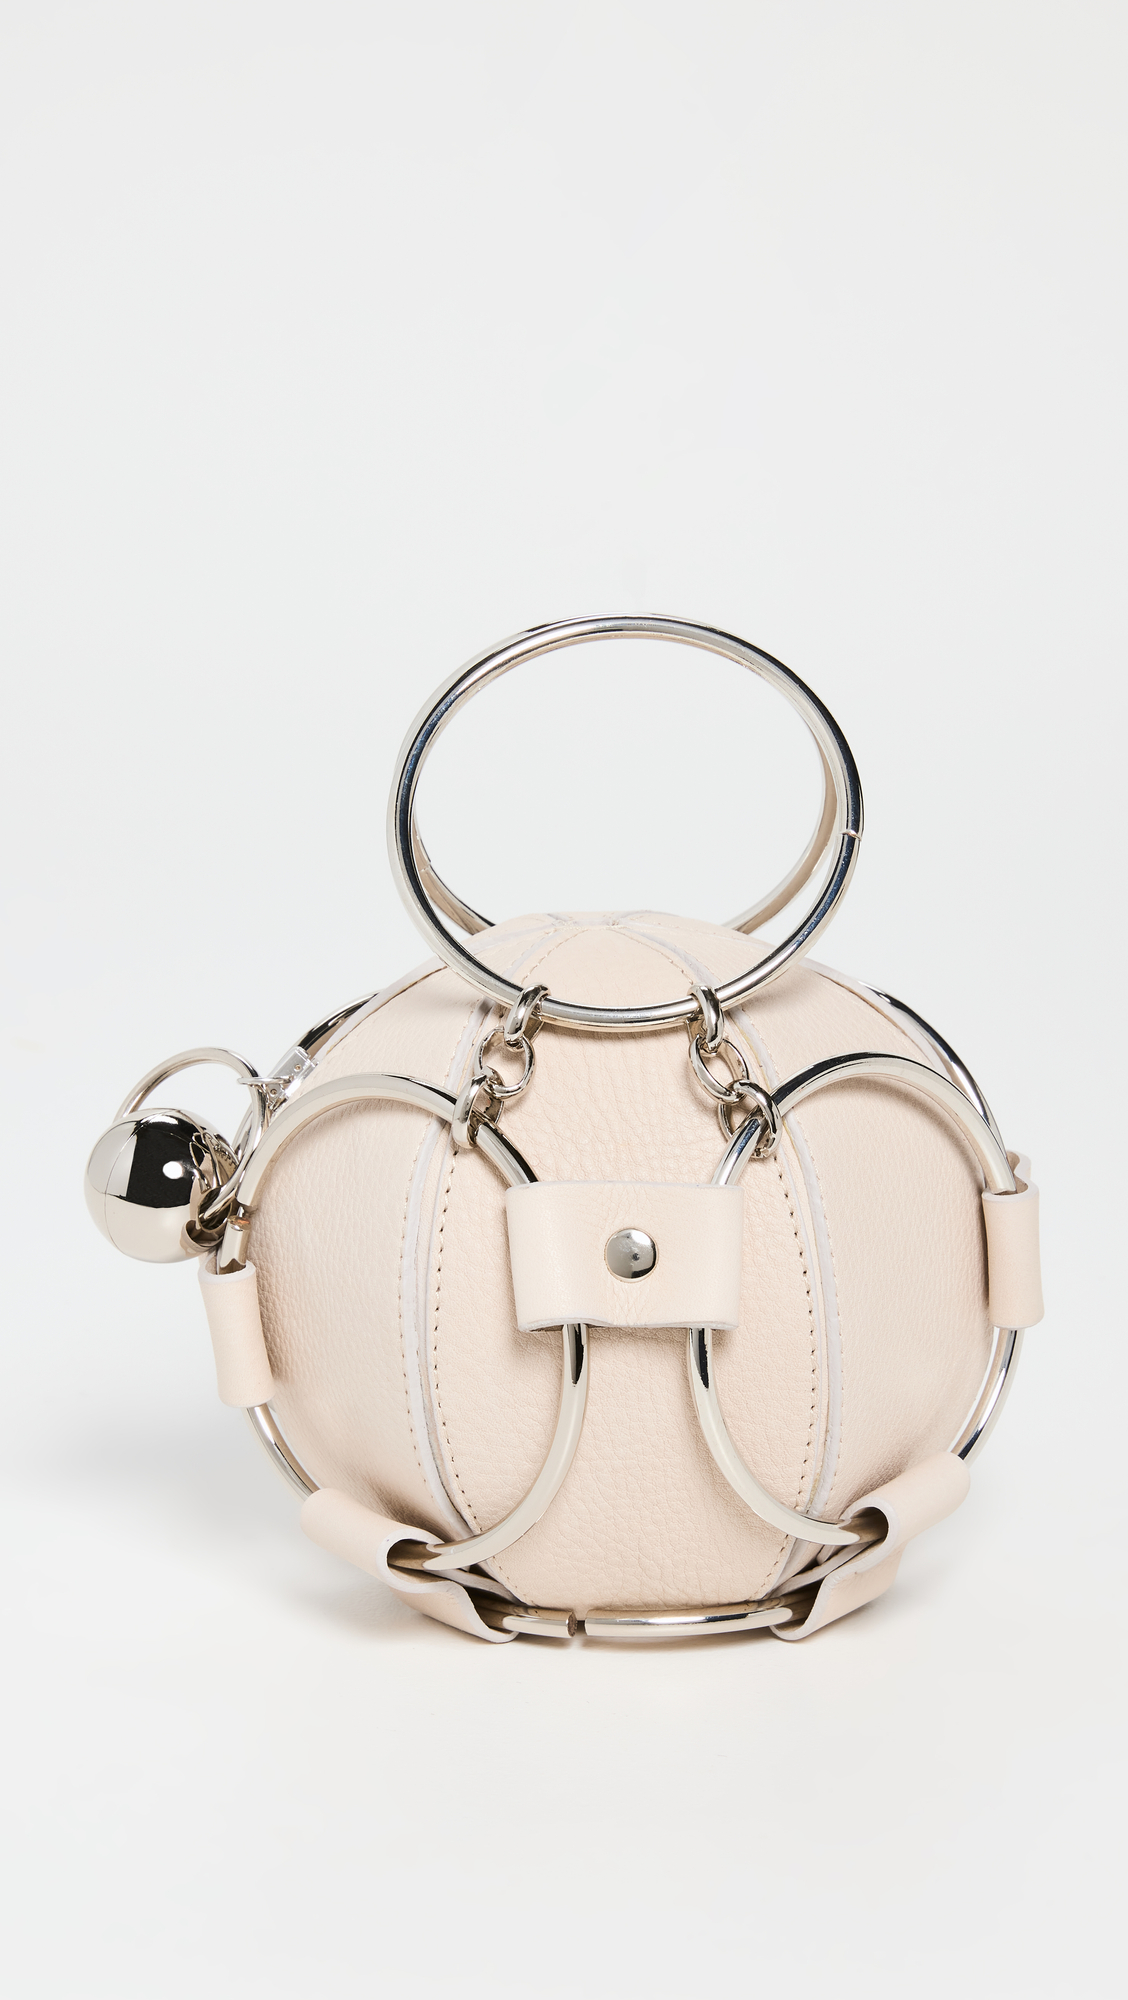 The Smallest Designer Bags in the World - Handbagholic